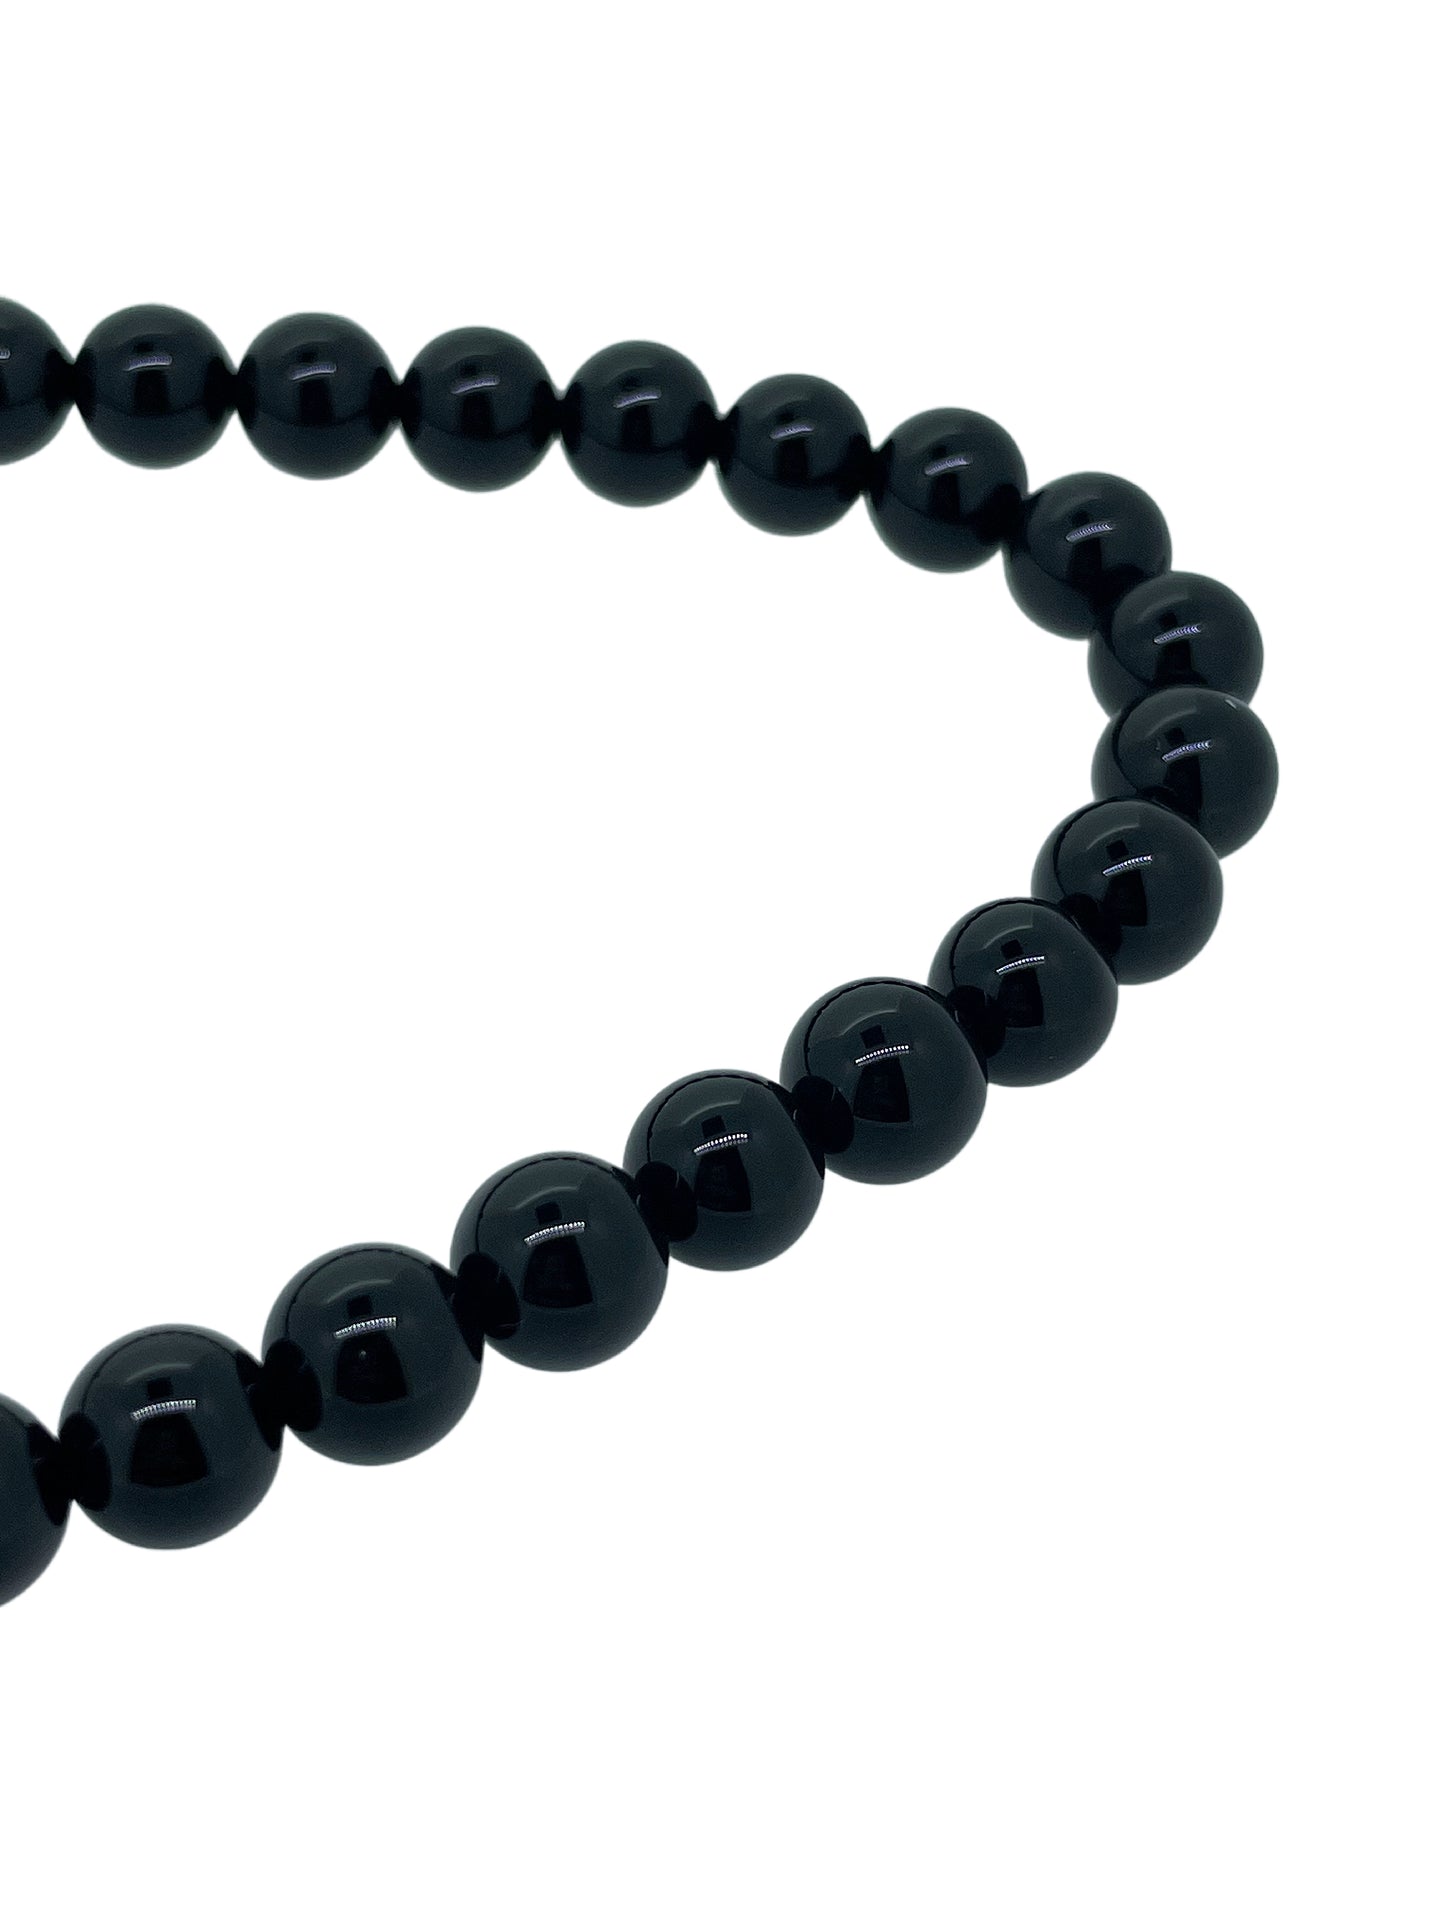 Black Onyx 8mm Beads